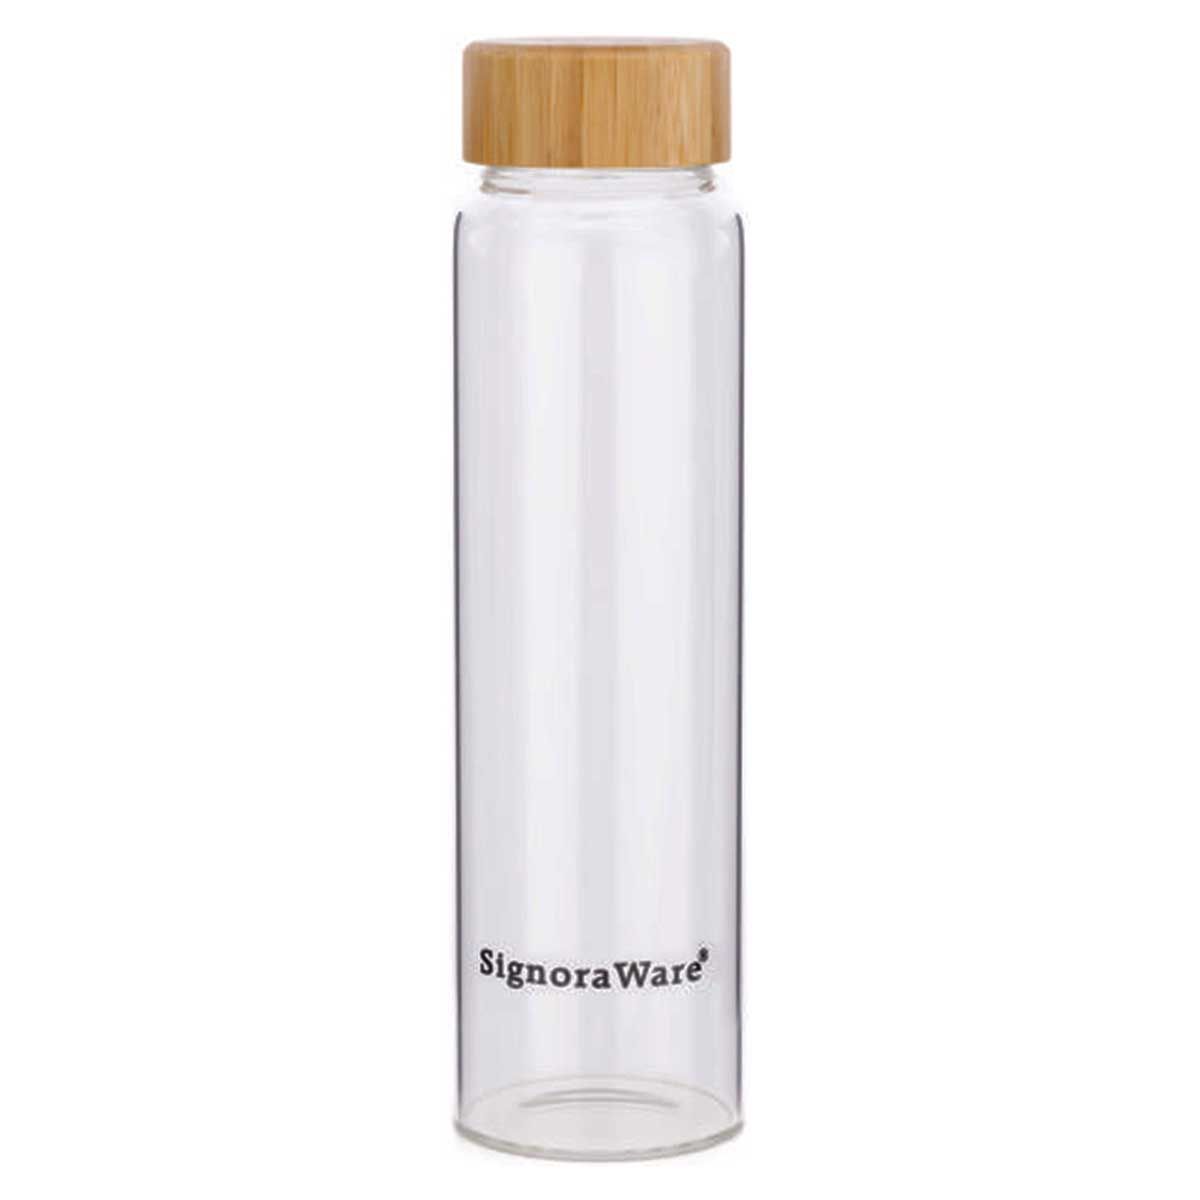 Signoraware Bamboo Glass Bottle 1000ml - 1425